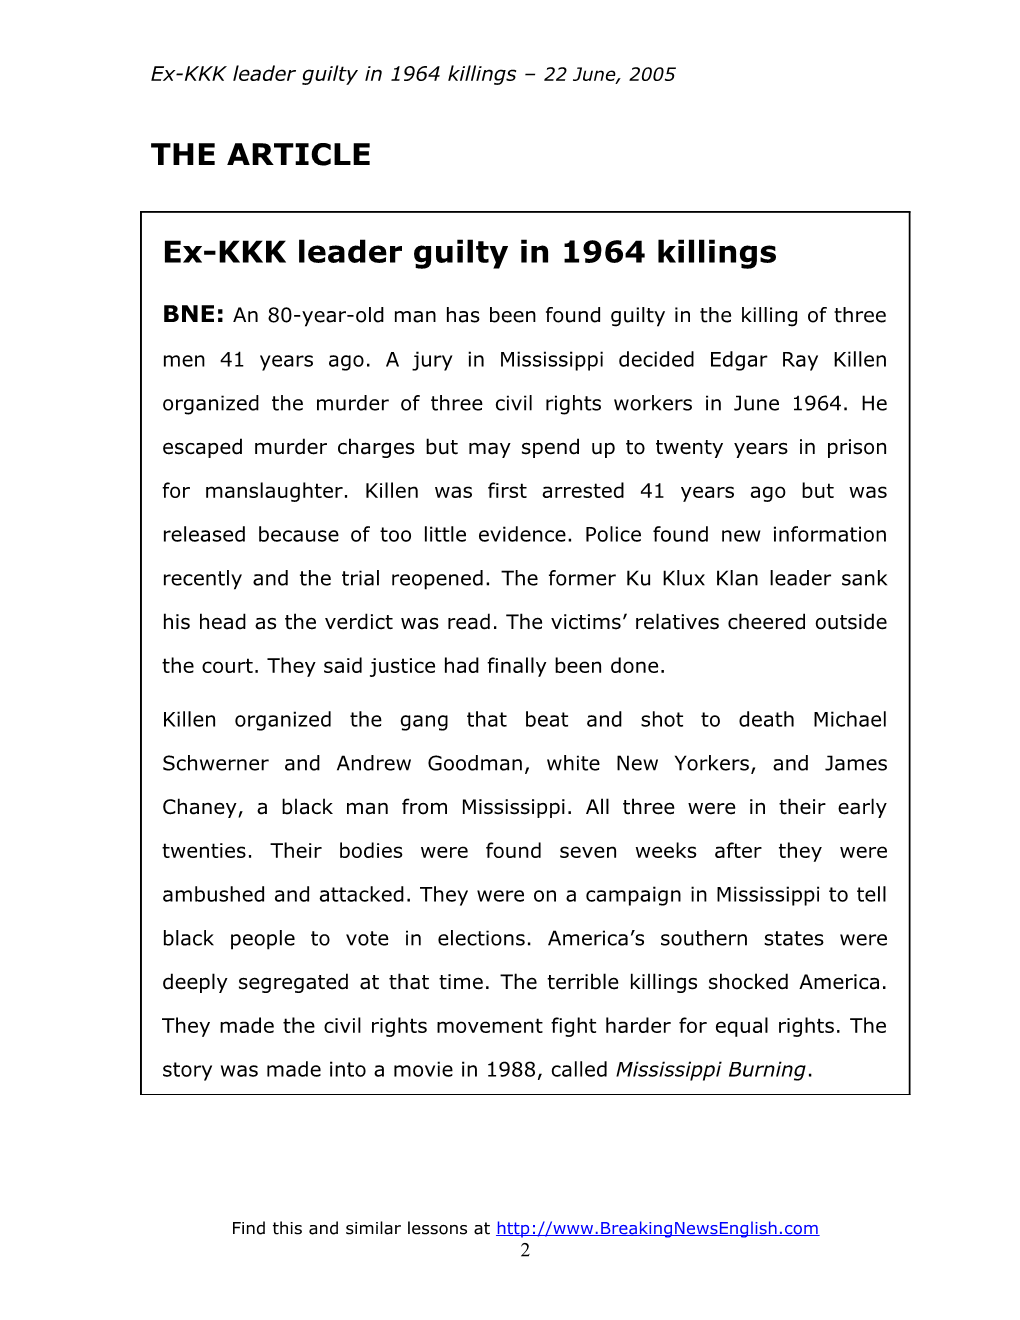 Ex-KKK Leader Guilty in 1964 Killings